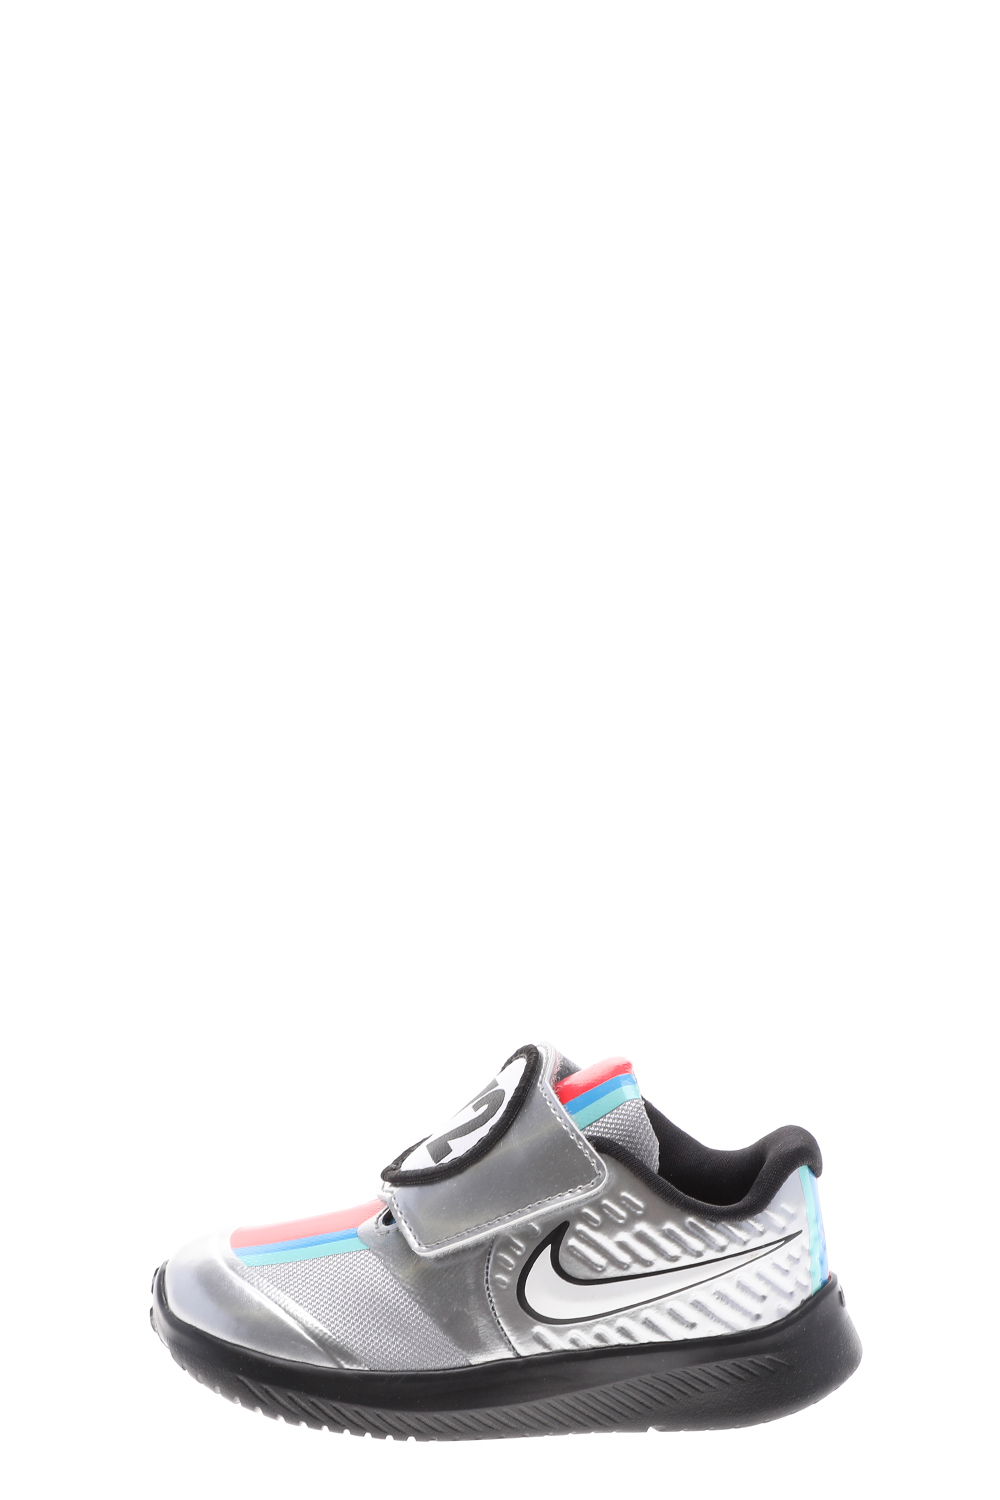 NIKE - Βρεφικά αθλητικά παπούτσια NIKE STAR RUNNER 2 AUTO (TDV) ασημί Παιδικά/Baby/Παπούτσια/Αθλητικά